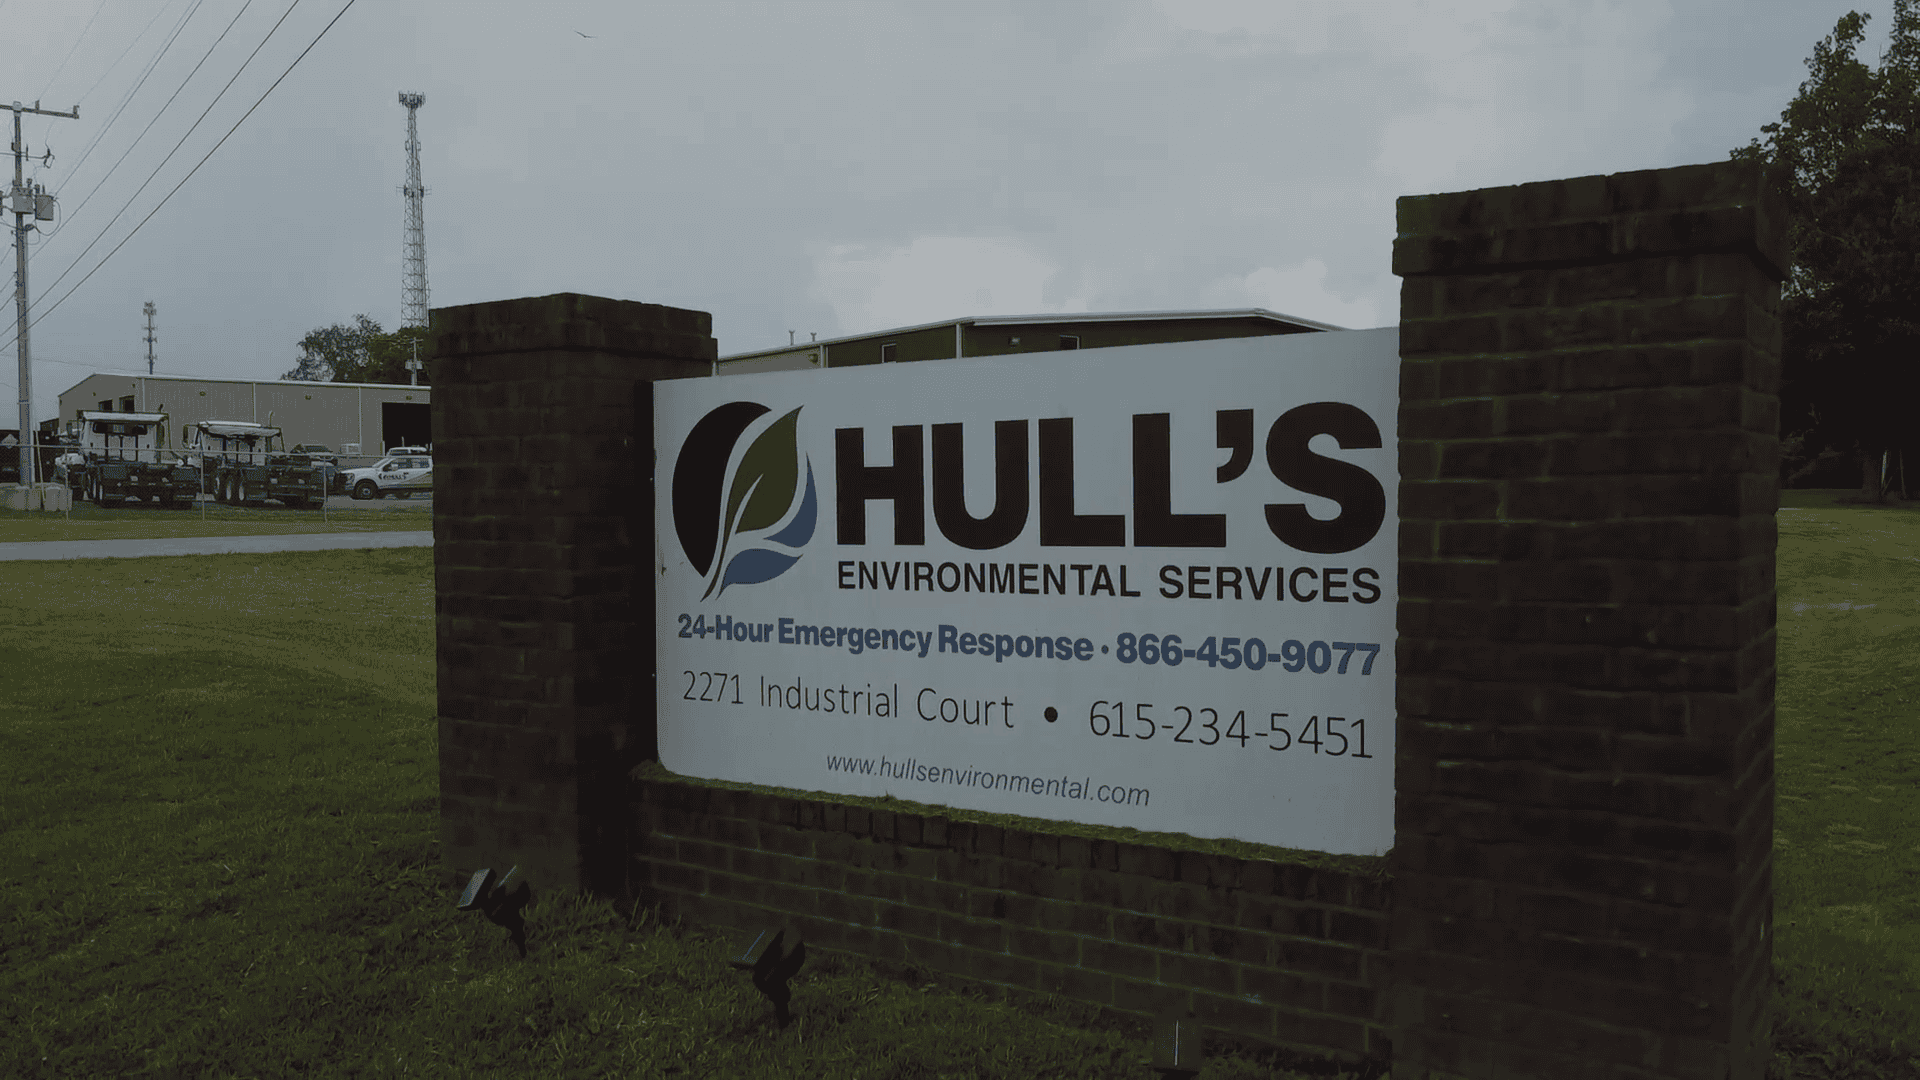 Hull's Environmental Services